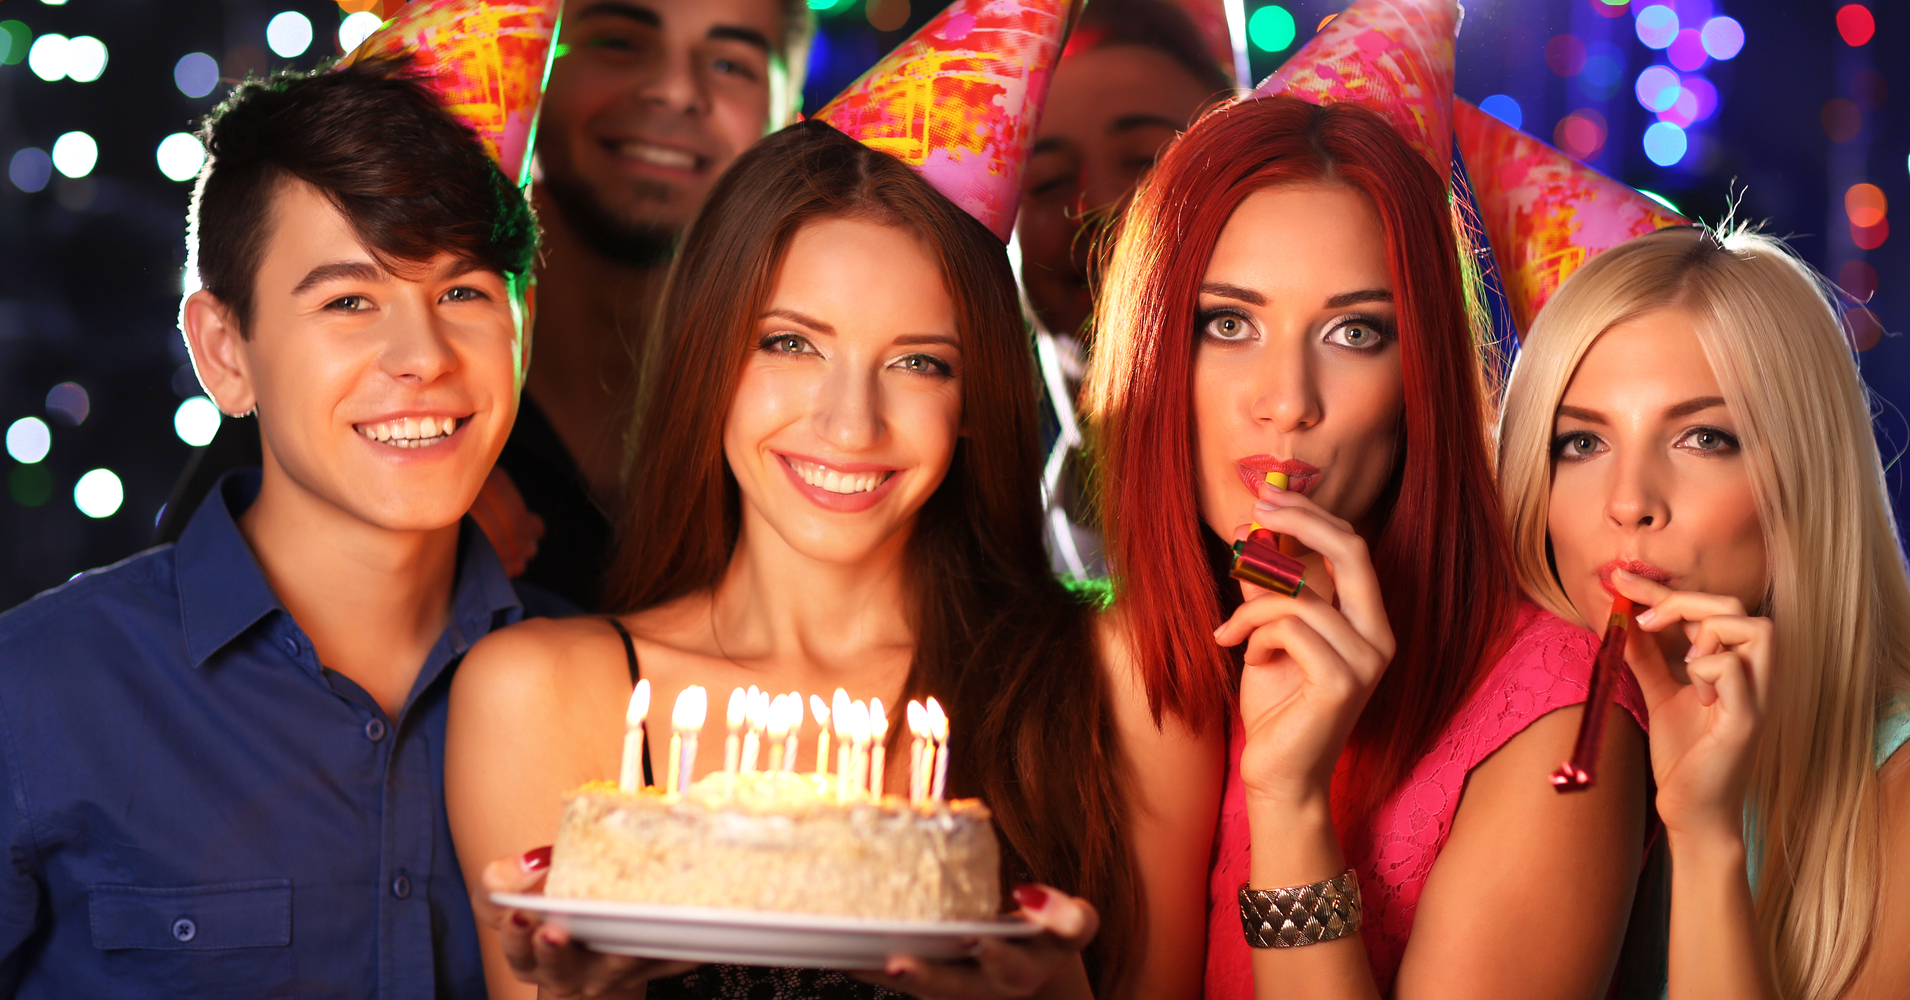 Where Should I Go For My Birthday Party - Keyshia Cole: "Where Should I